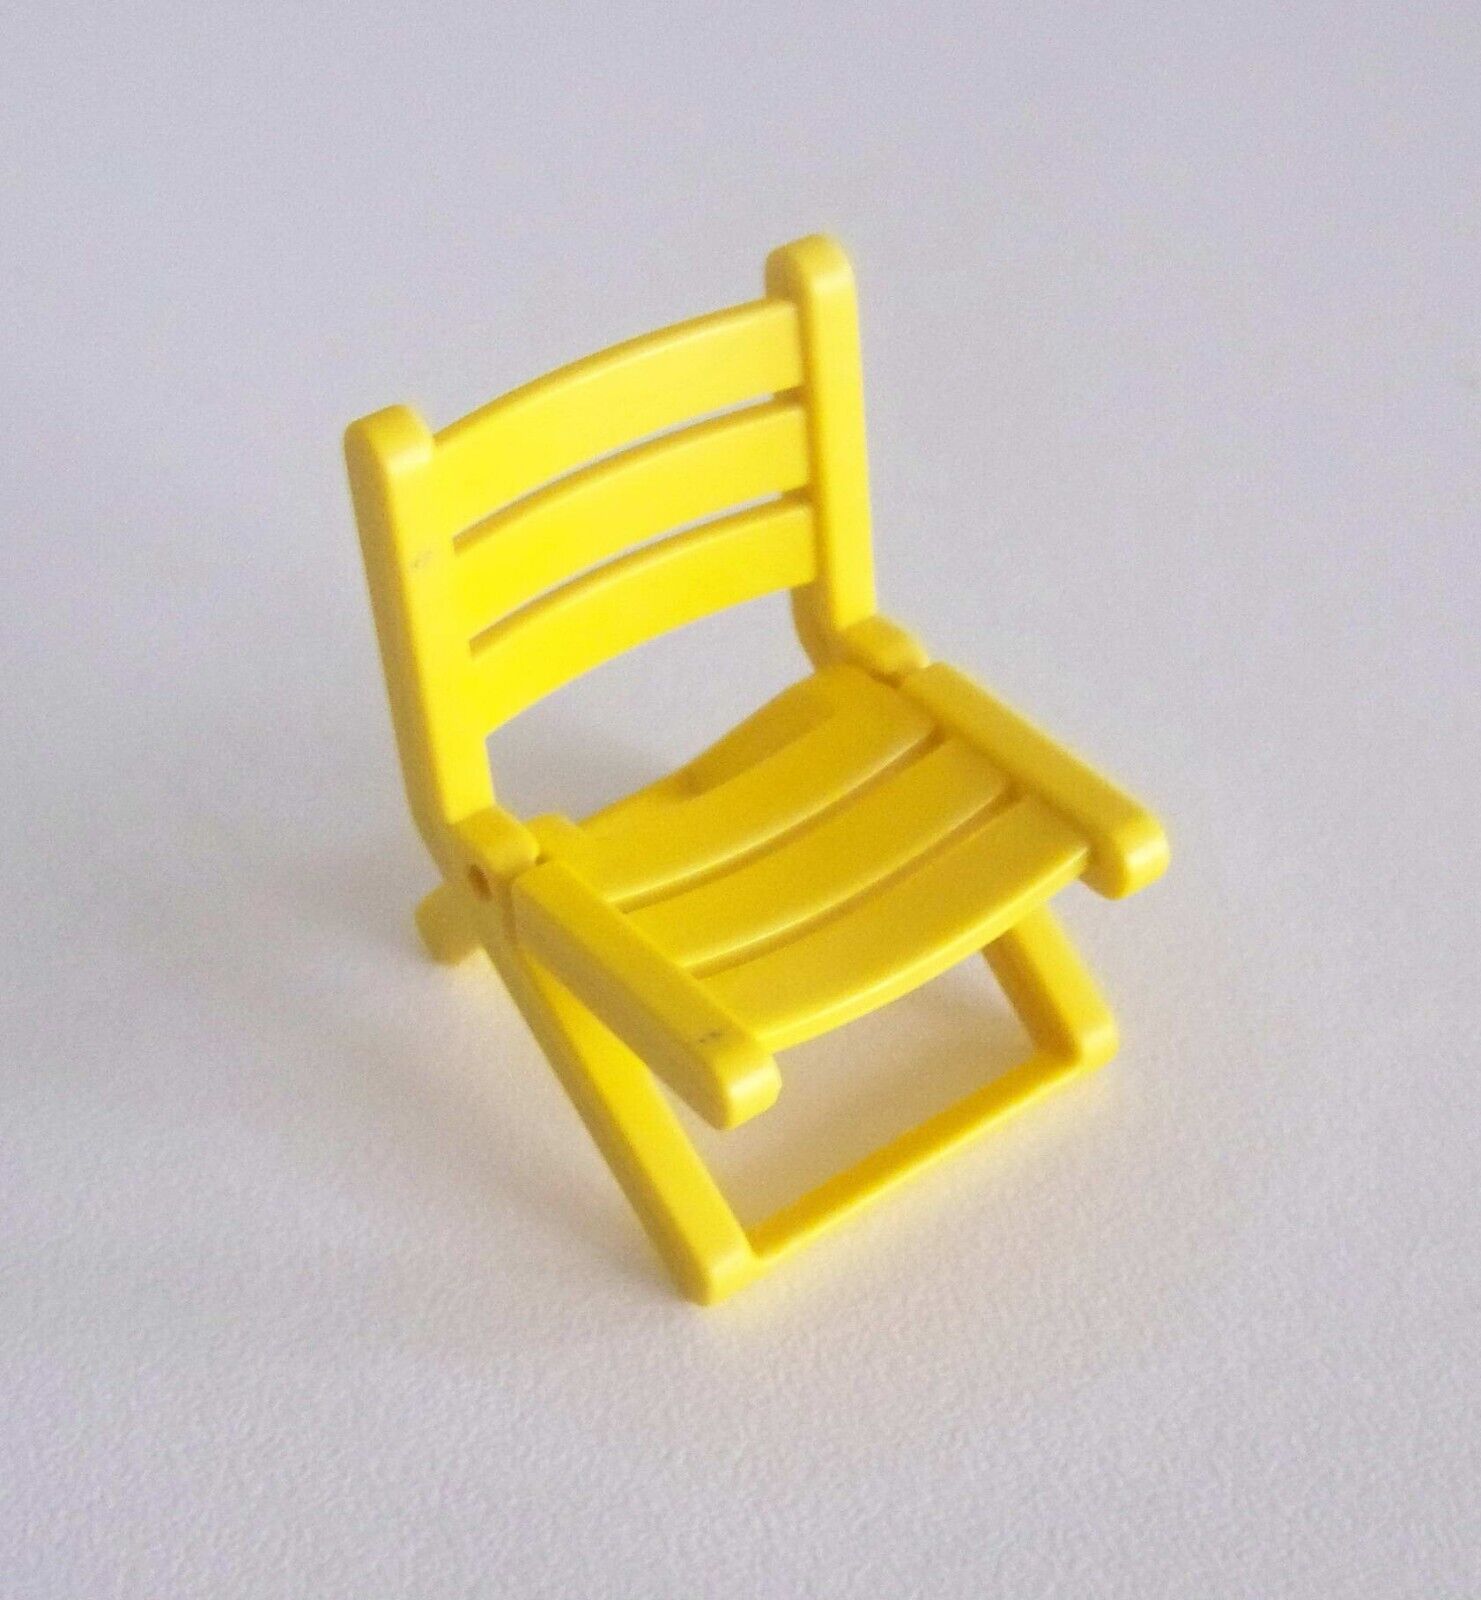 PLAYMOBIL (O1110) ZOO - yellow folding chair 3634 3213 3236 3258